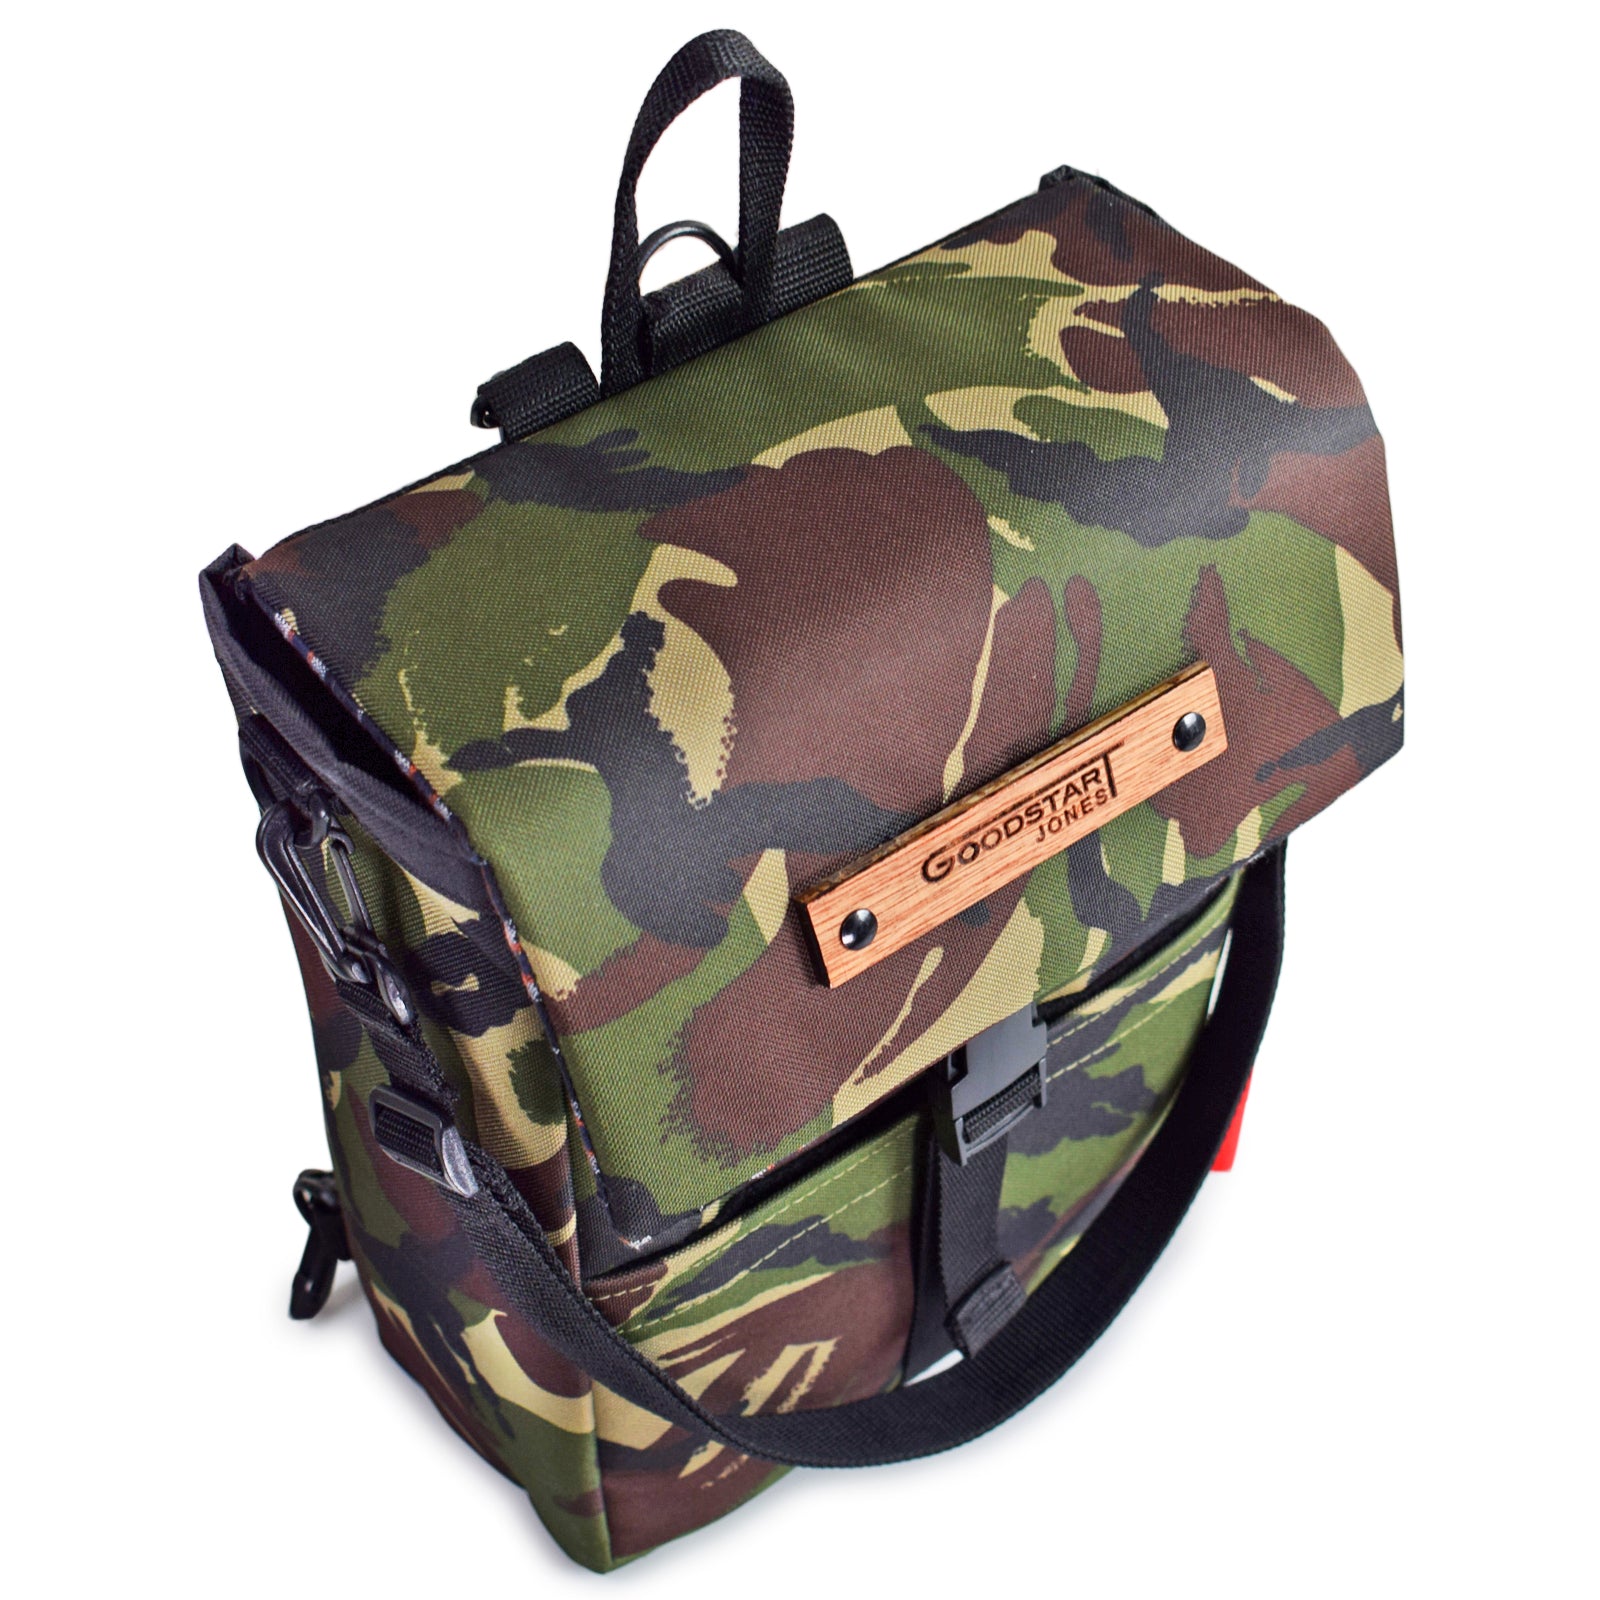 top of green camouflage backpack with Goodstart Jones wood logo